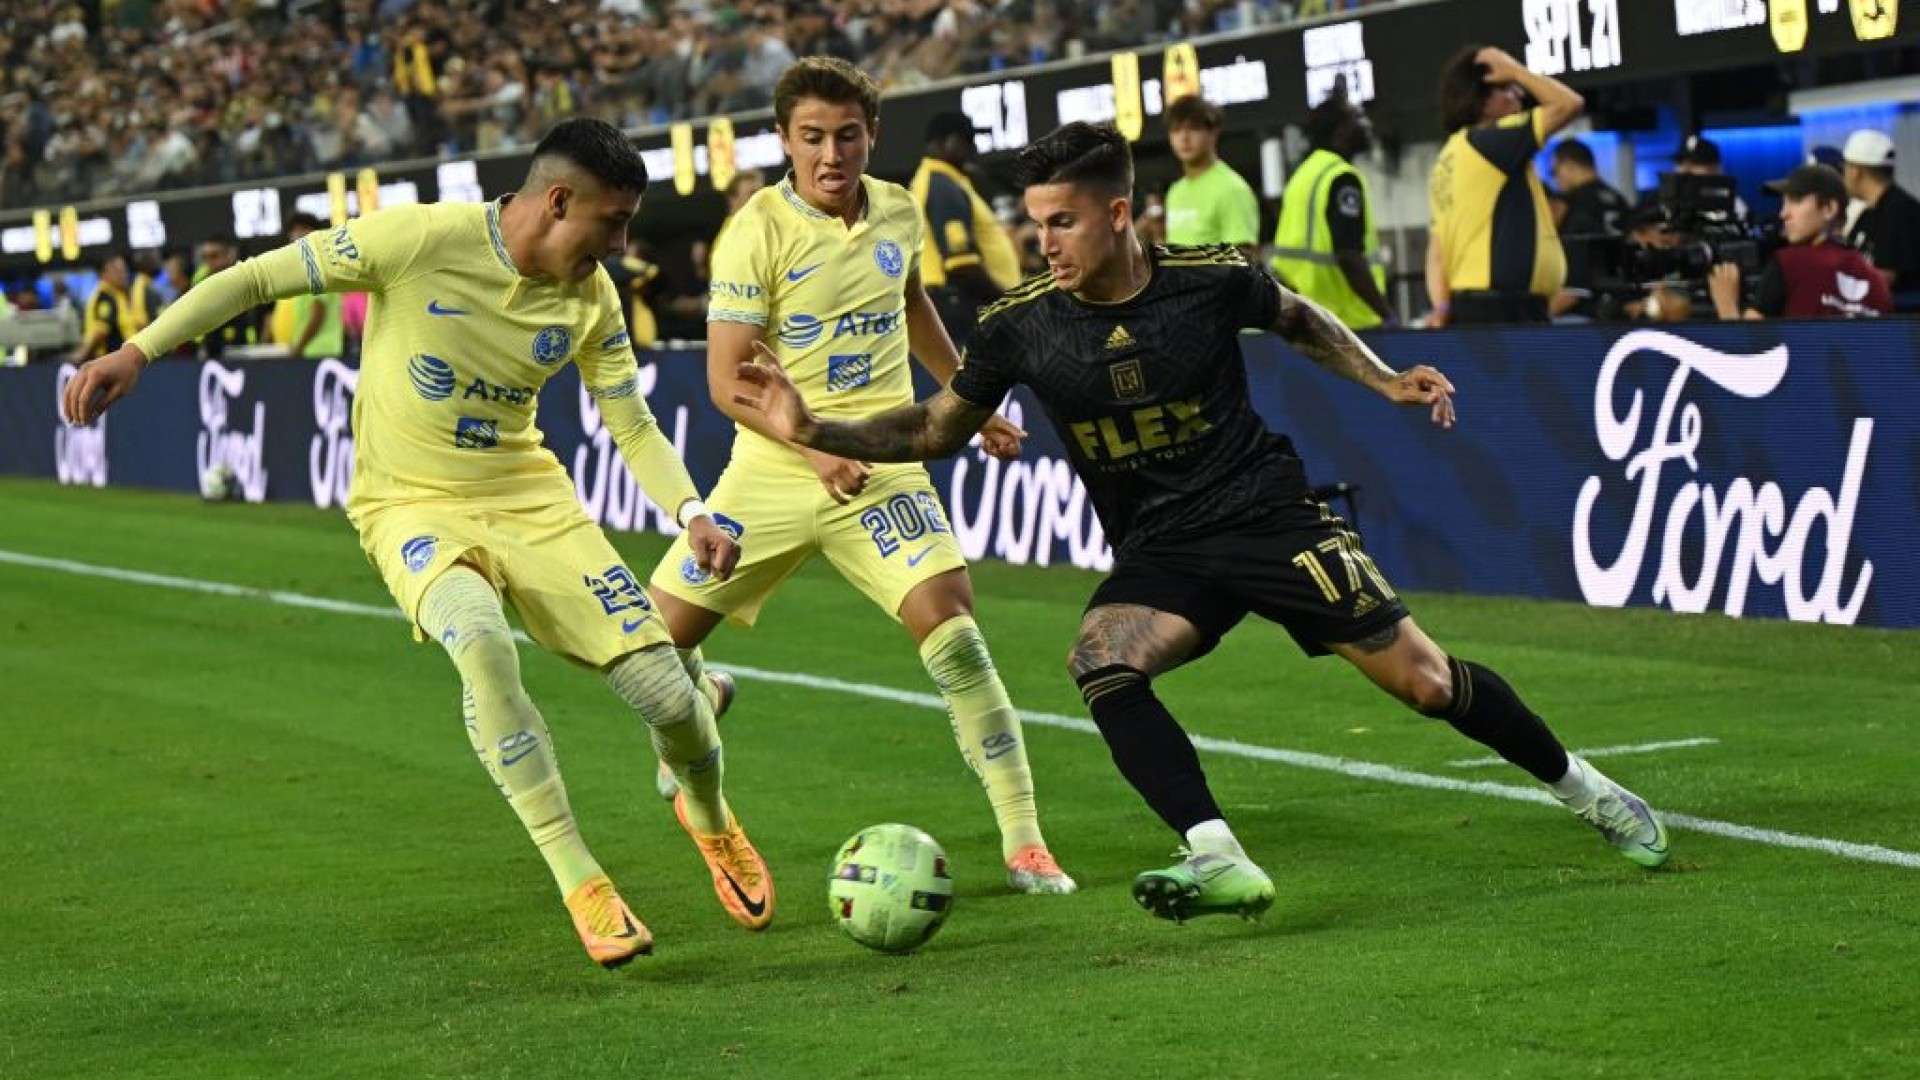 Emilio Lara Iker Moreno LAFC vs América Leagues Cup 2022